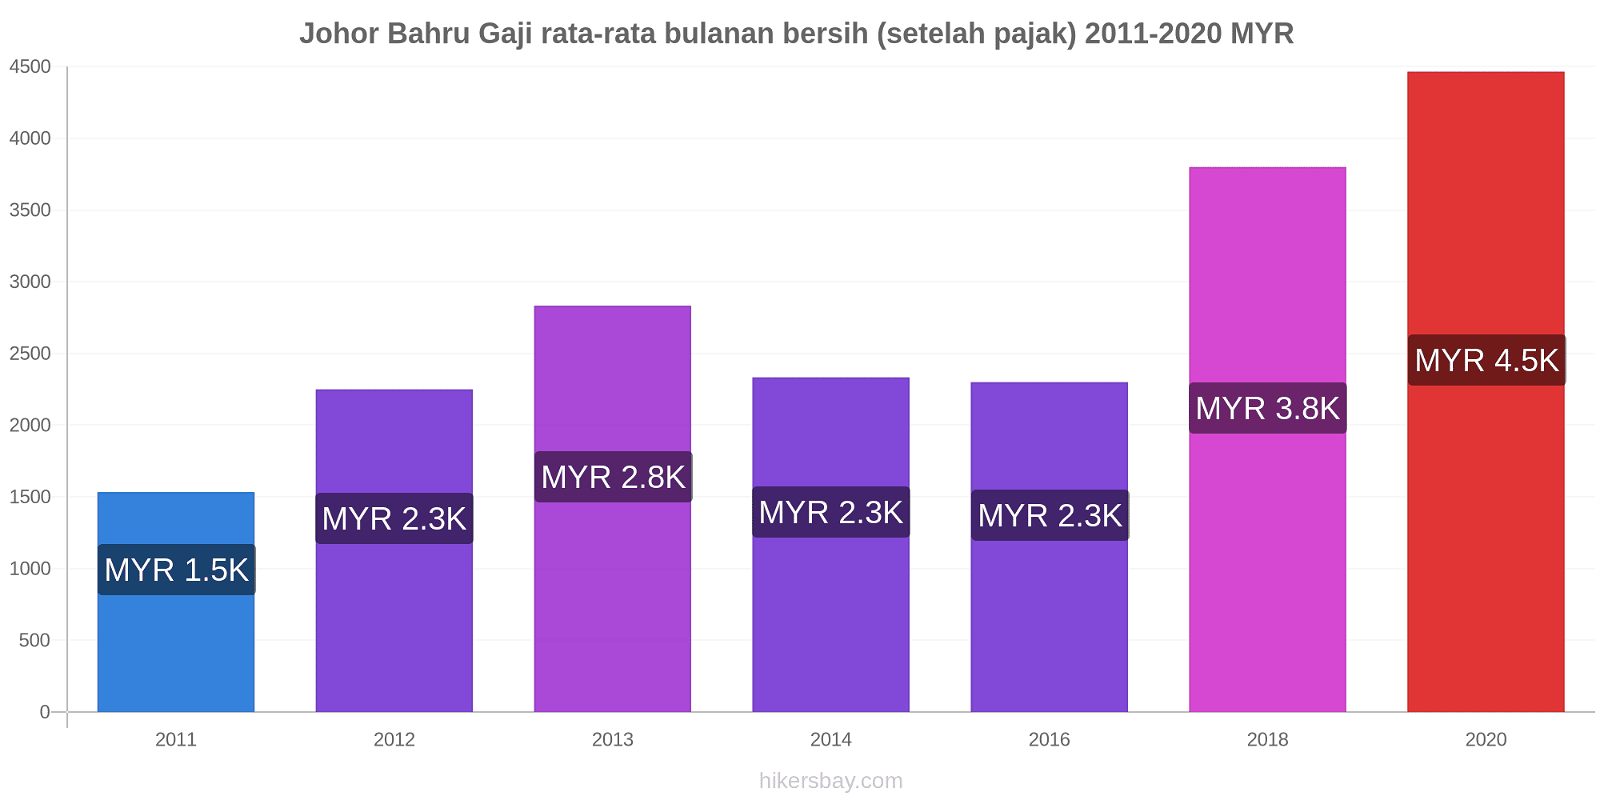 Johor Bahru perubahan harga Gaji rata-rata bulanan bersih (setelah pajak) hikersbay.com